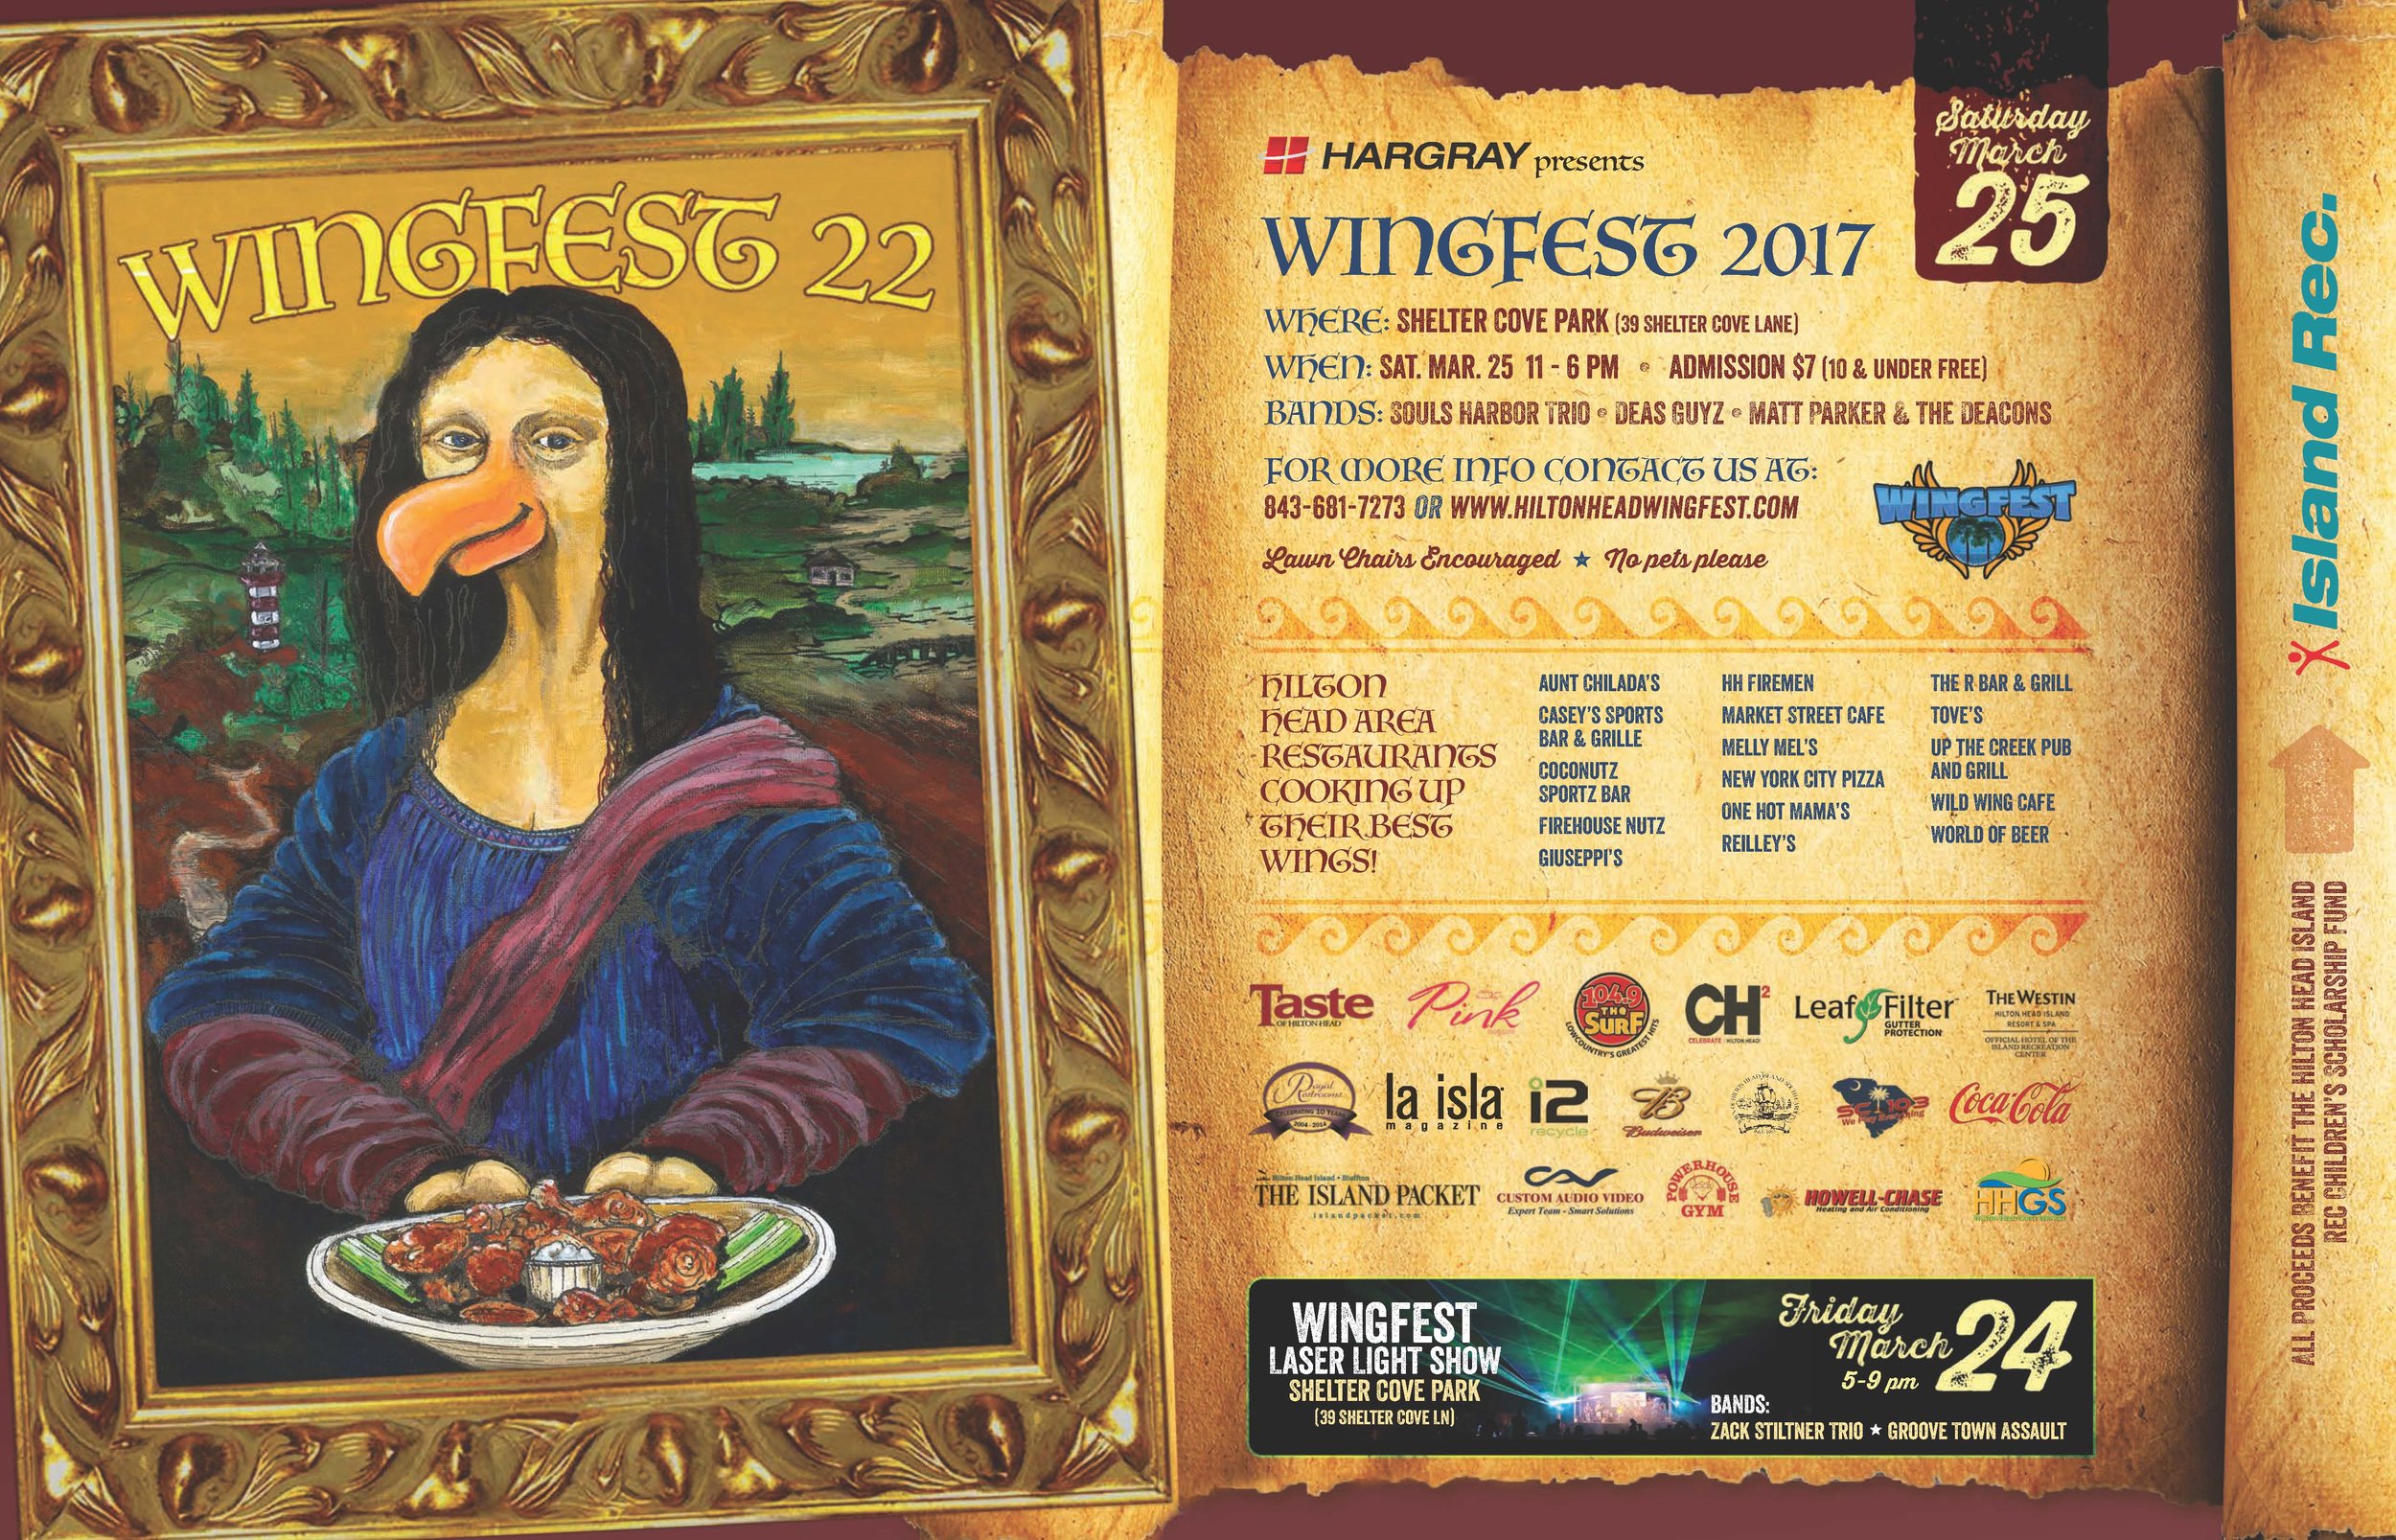 Wingfest 22 poster.jpg